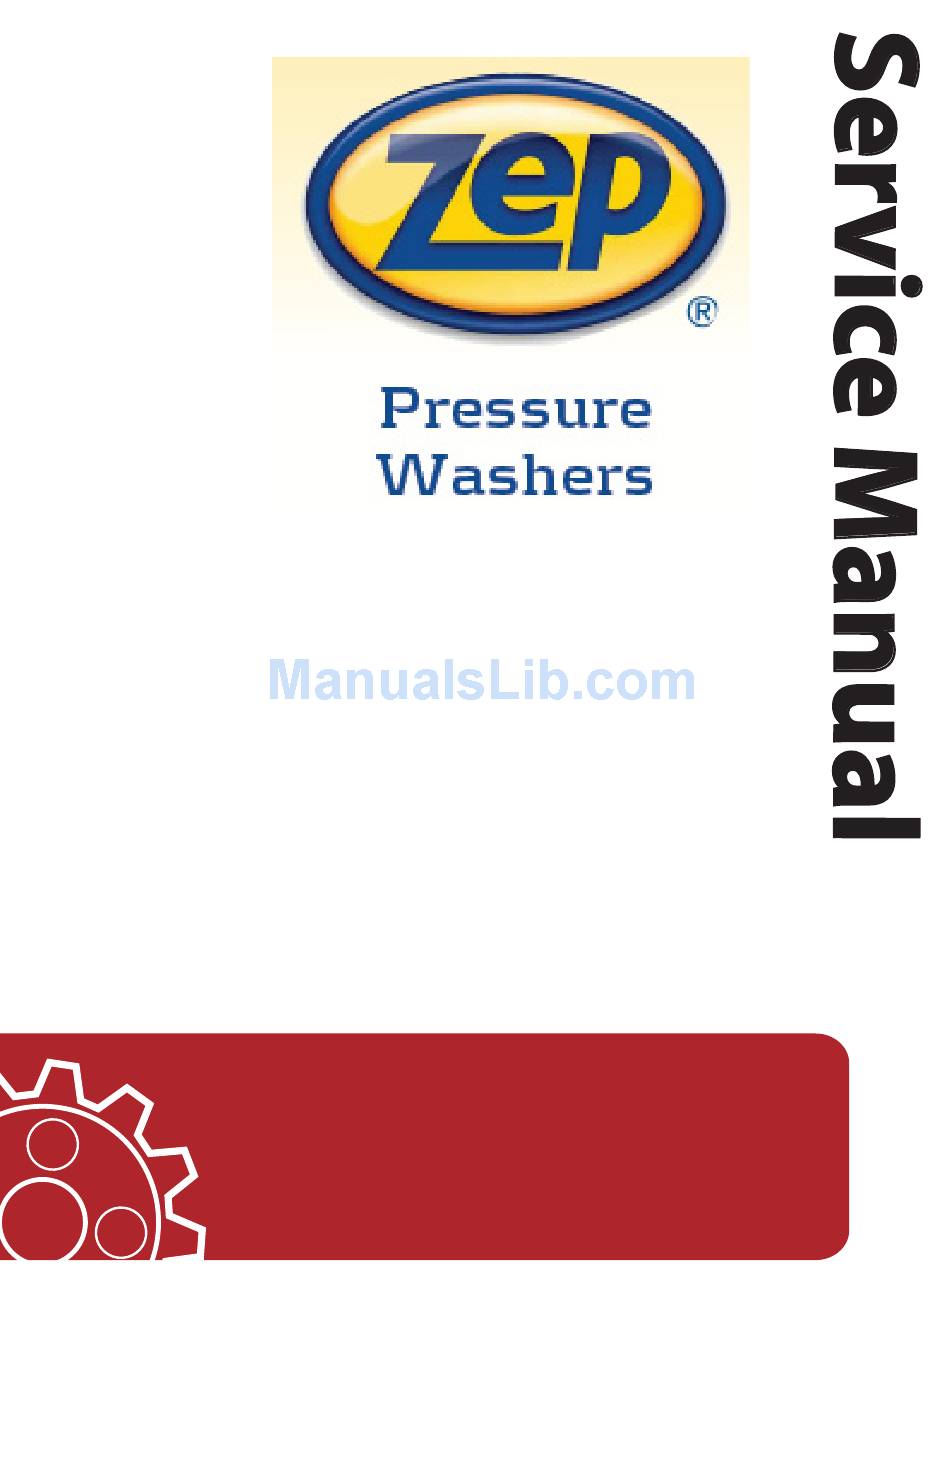 ZEP PRESSURE WASHERS SERVICE MANUAL Pdf Download | ManualsLib